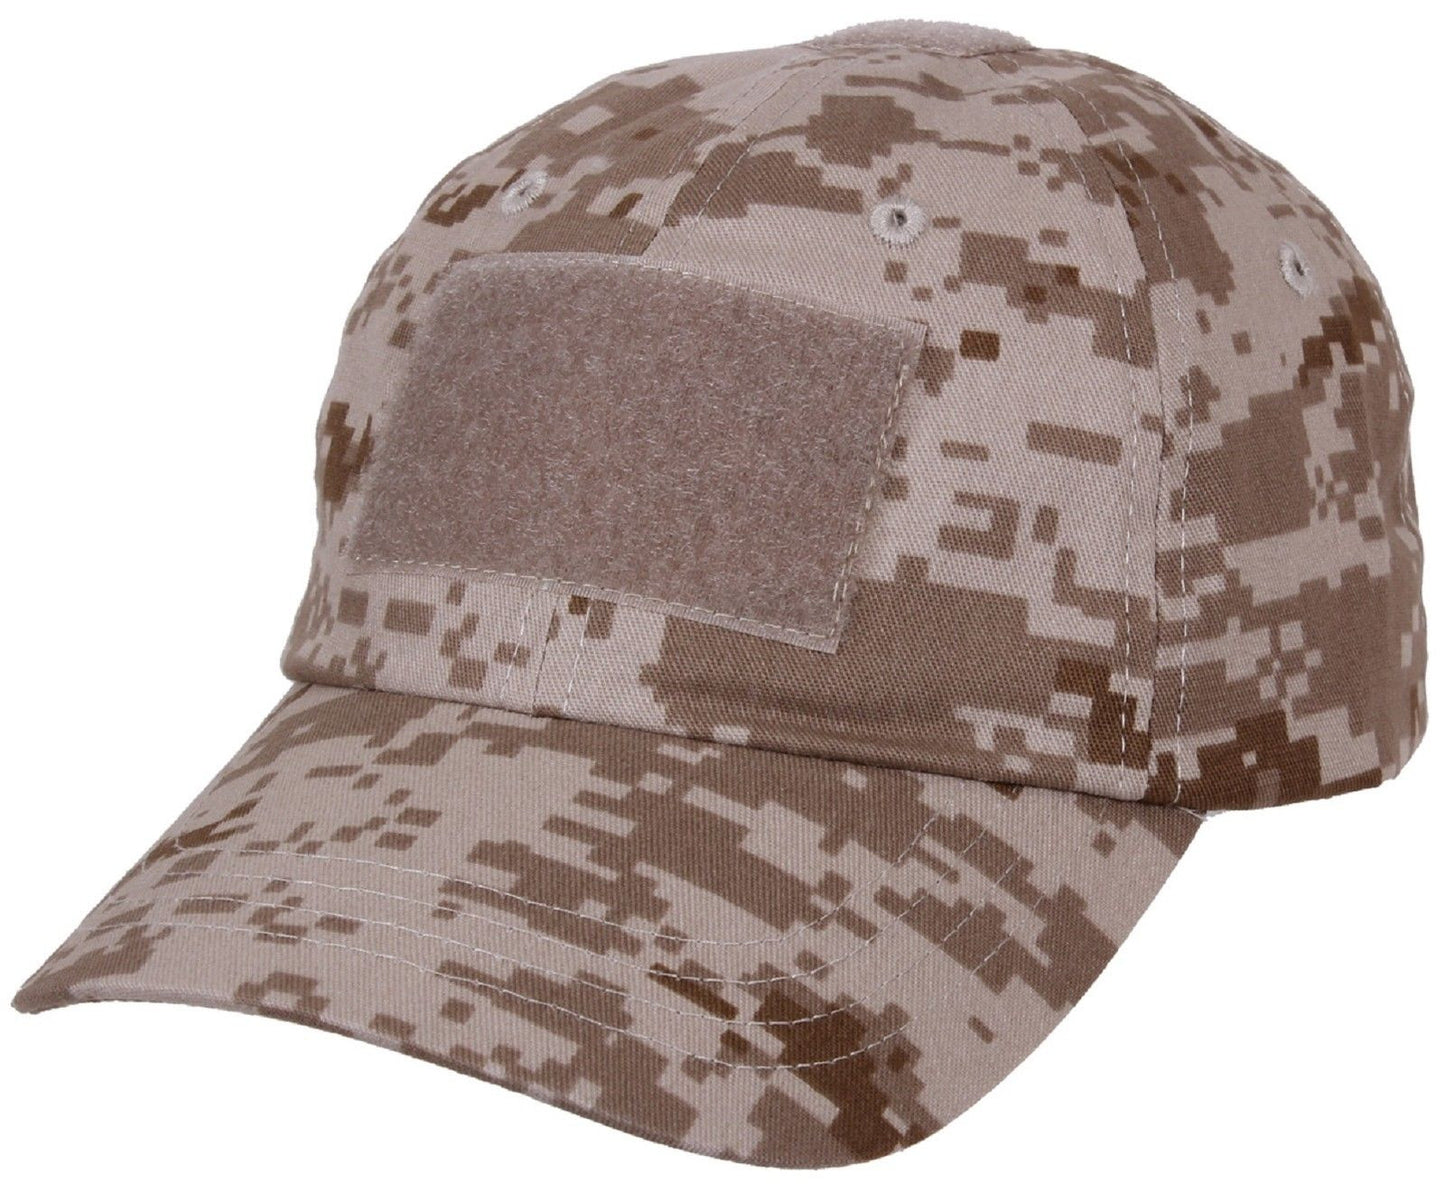 Desert Digital Tan Camouflage Tactical Operator Cap - Patch Area Baseball Hat